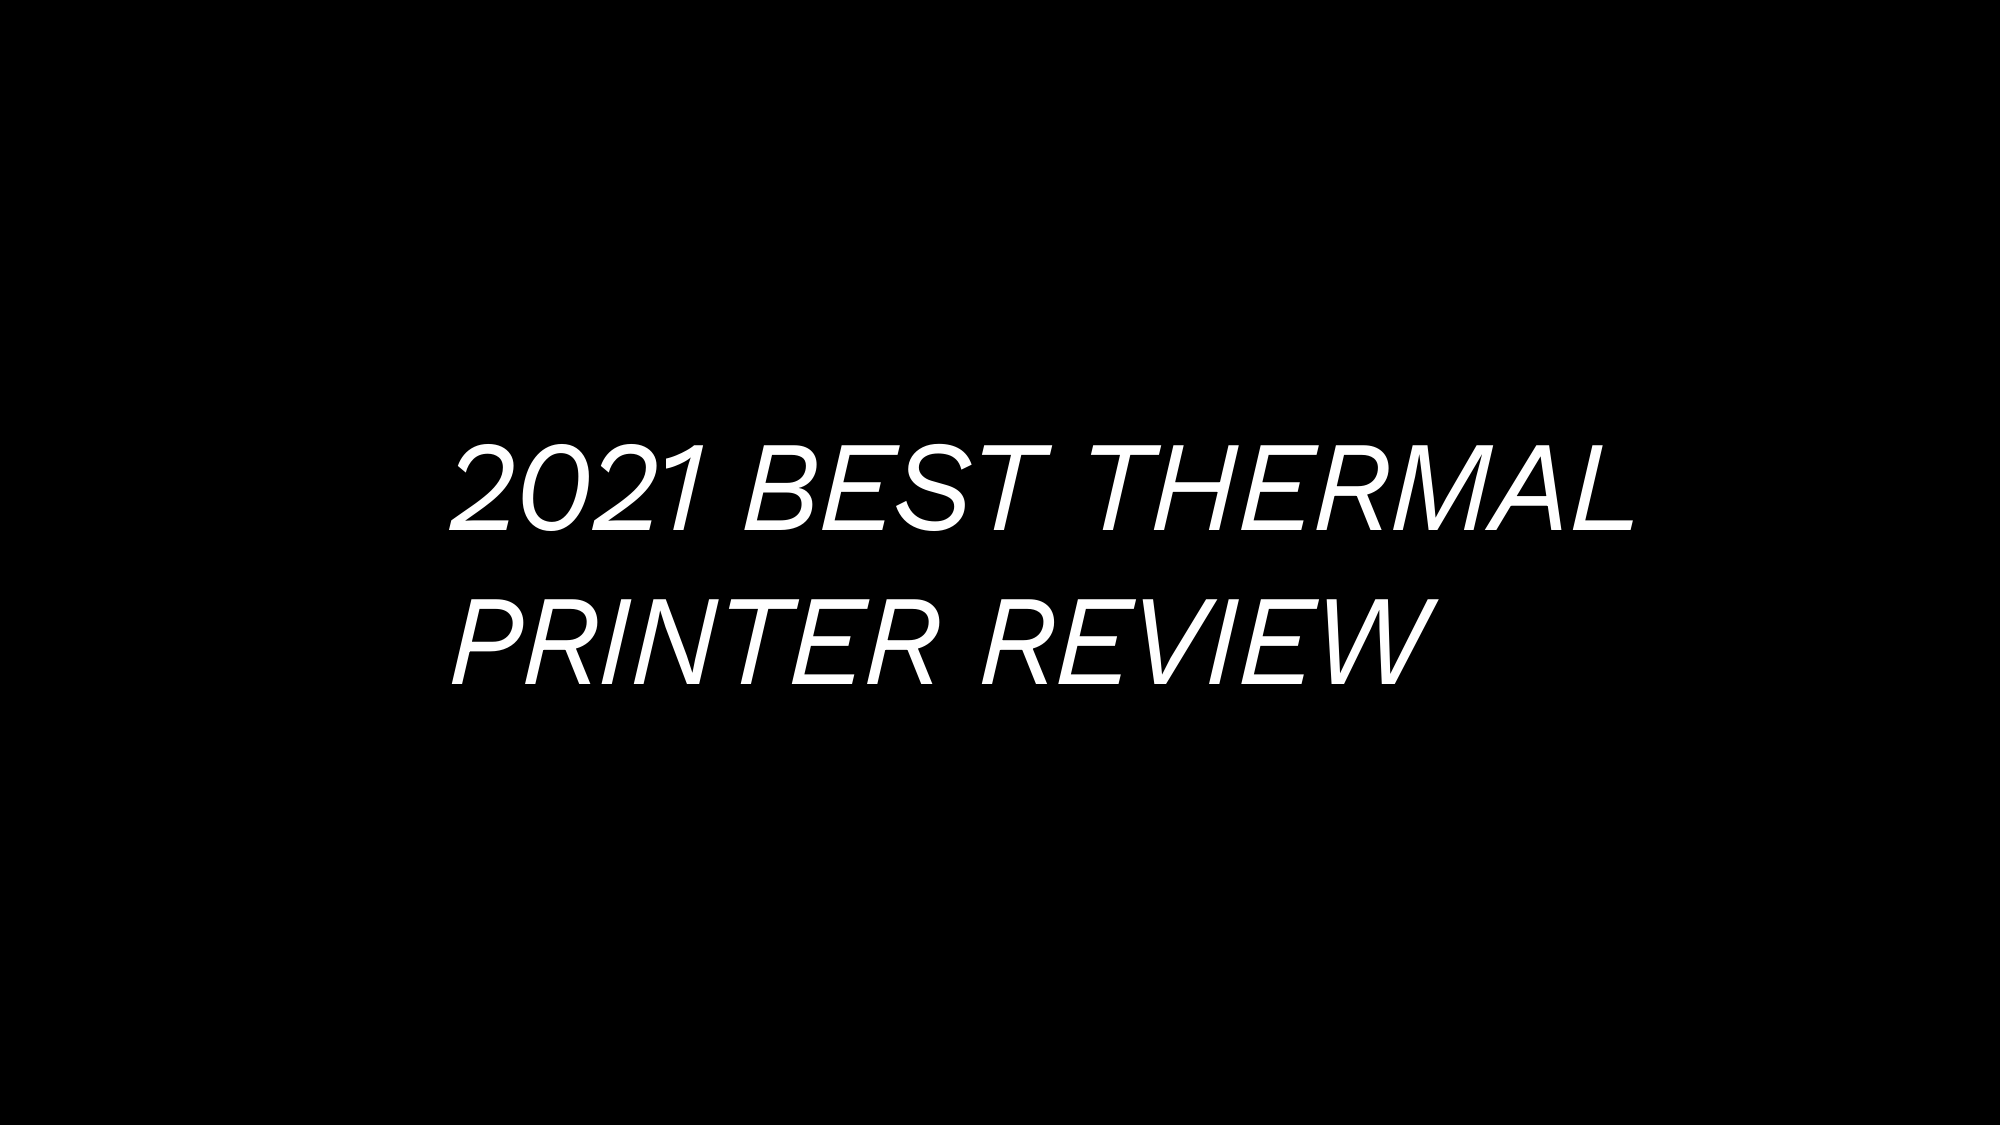 Thermal Label Printer Unboxing